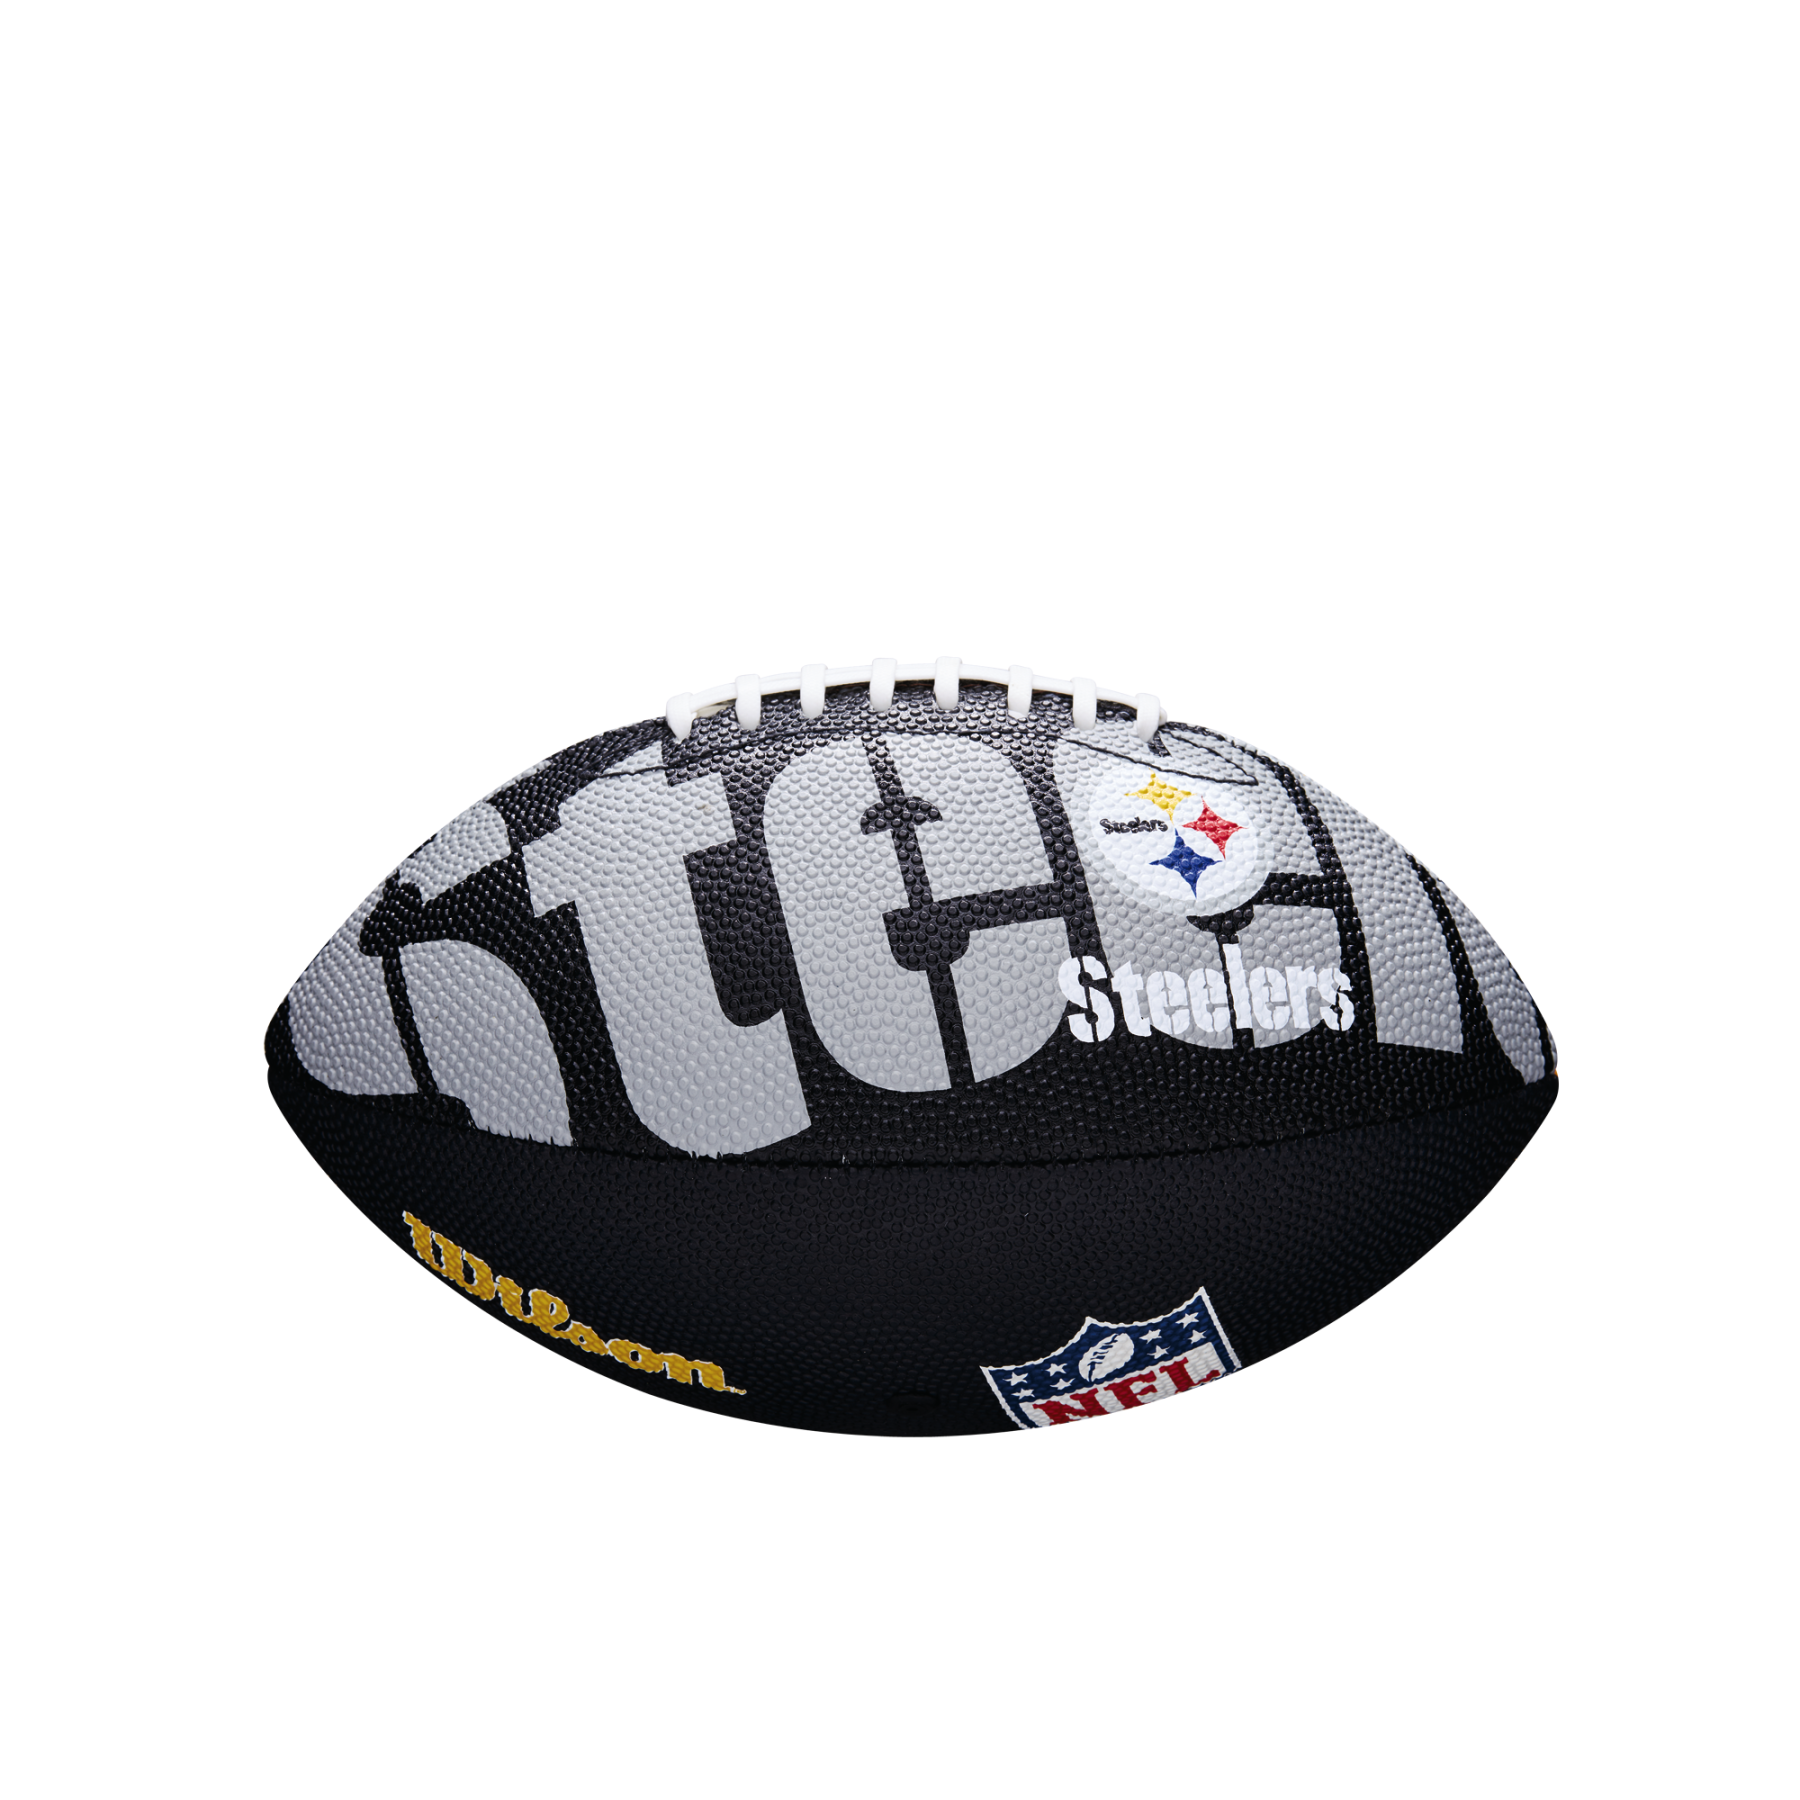 Children's ball Wilson Steelers NFL Logo